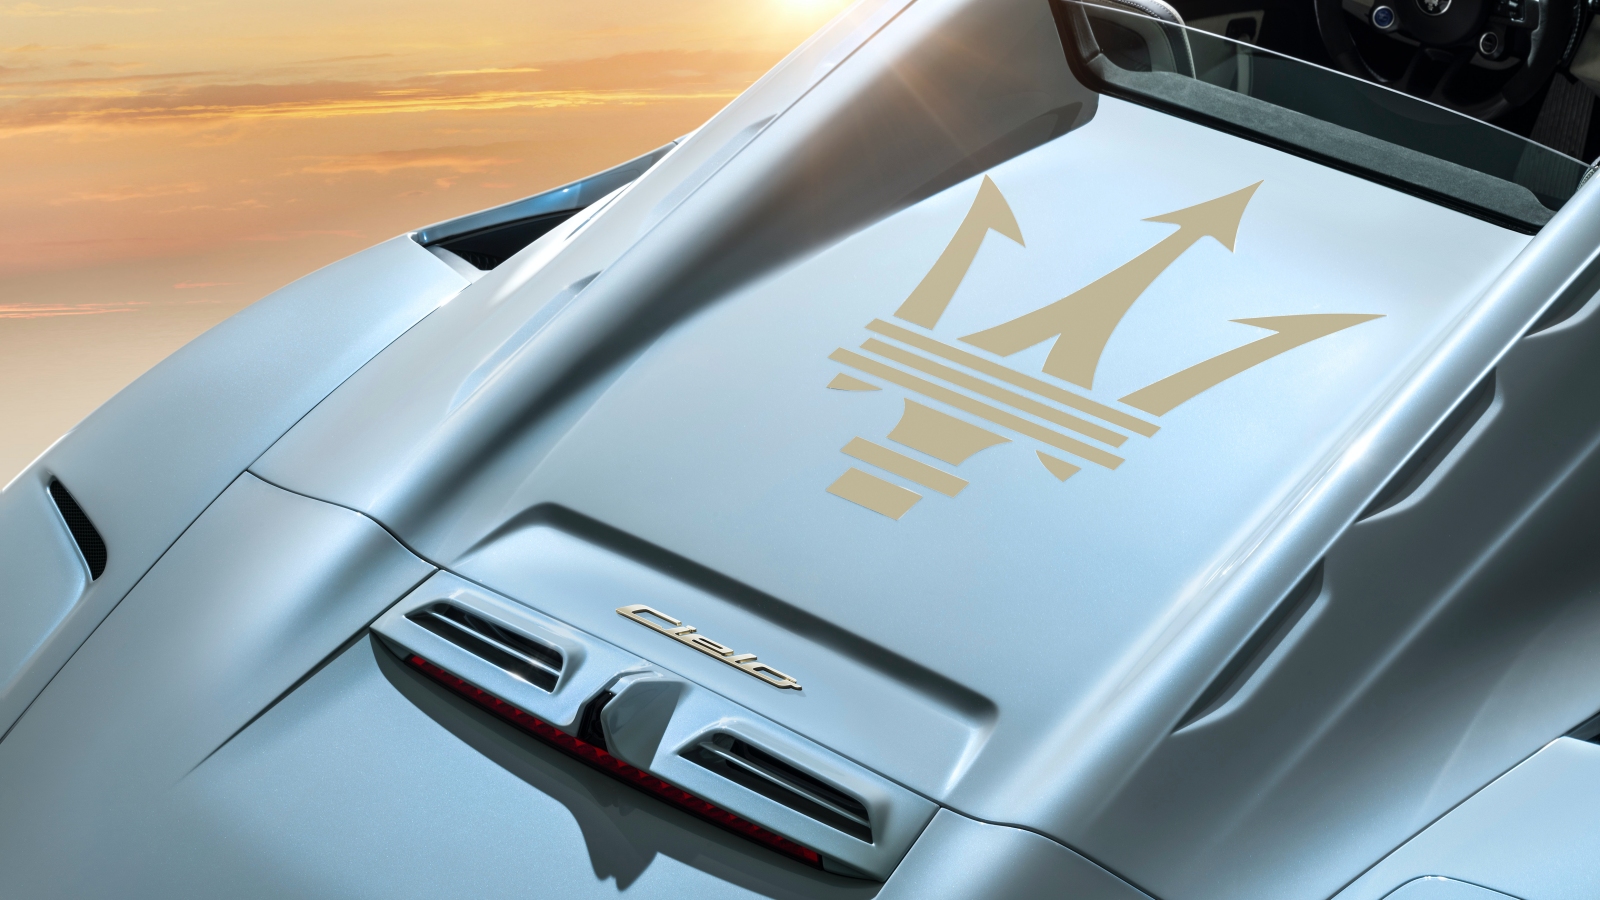 Maserati MC20 Cielo ?>